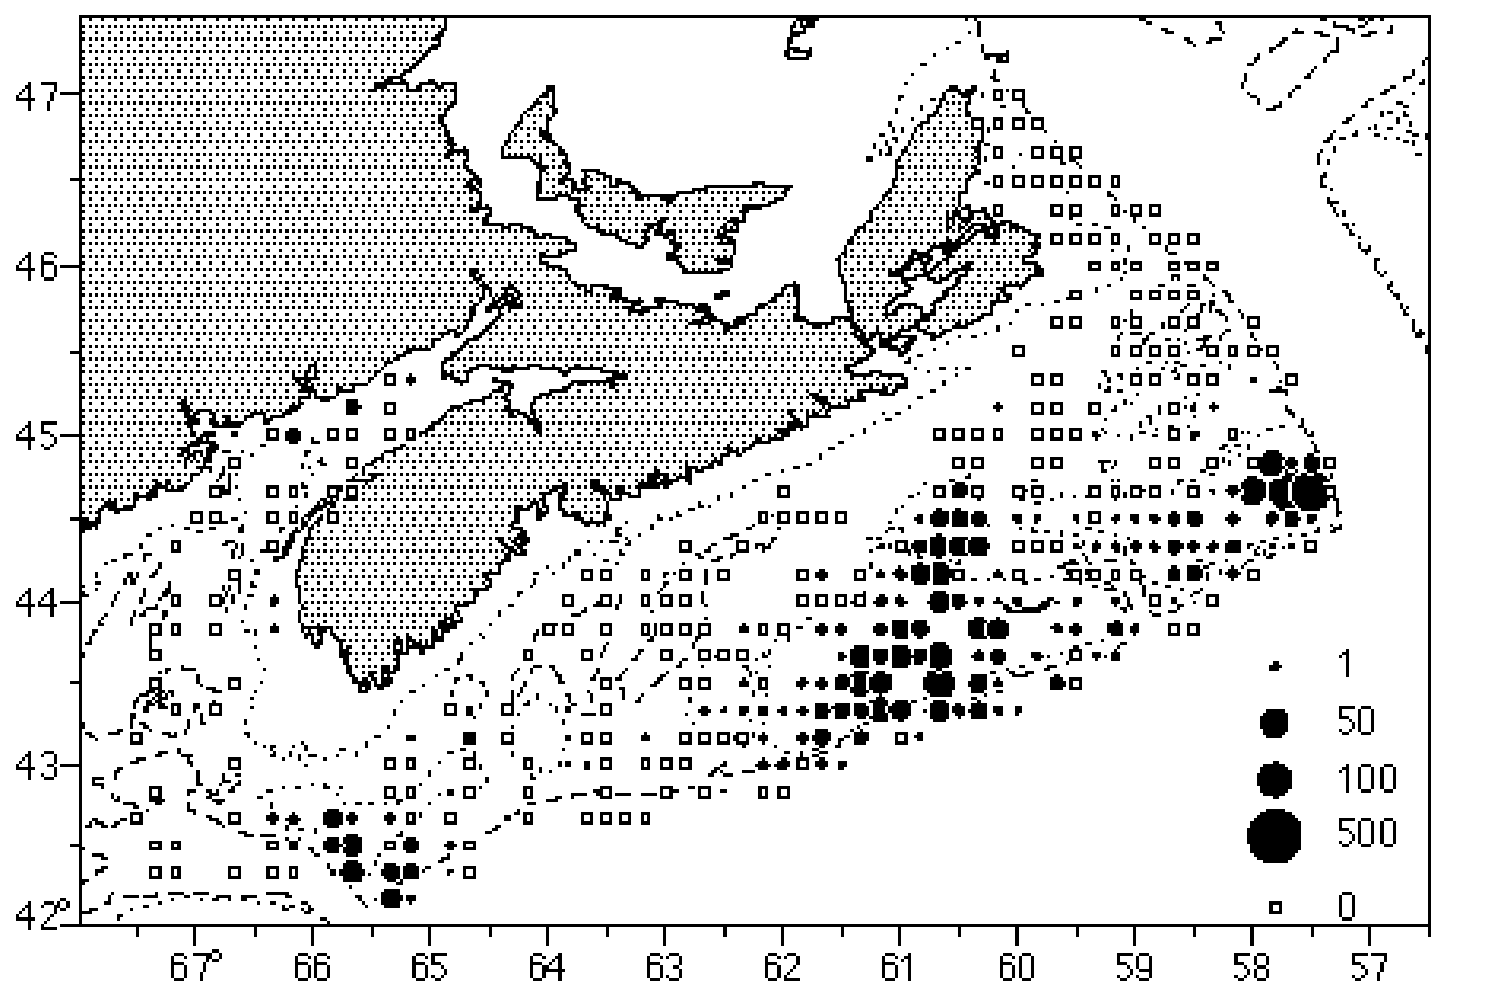 Figure 12 - Yellowtail Flounder Biomass (kg/tow) from the 1994-1997 Summer Groundfish Surveys